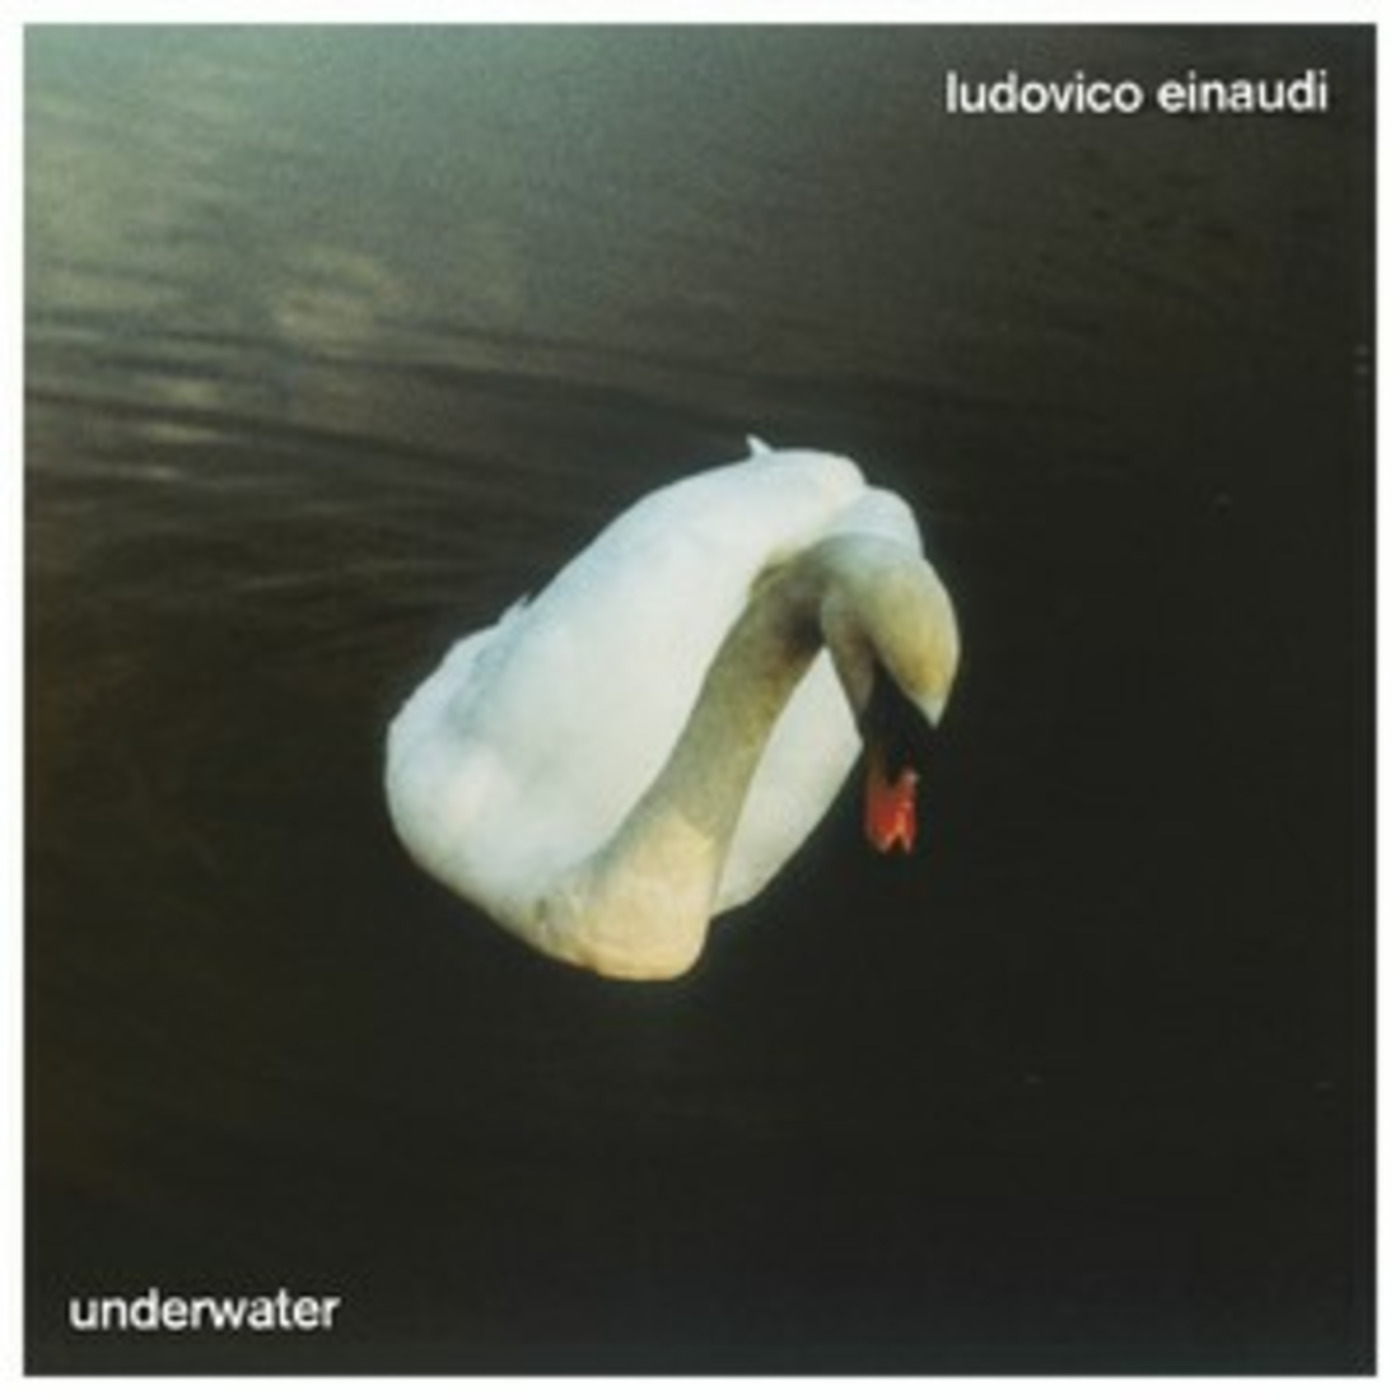 Episode 98: 18198 Ludovico Einaudi: Underwater